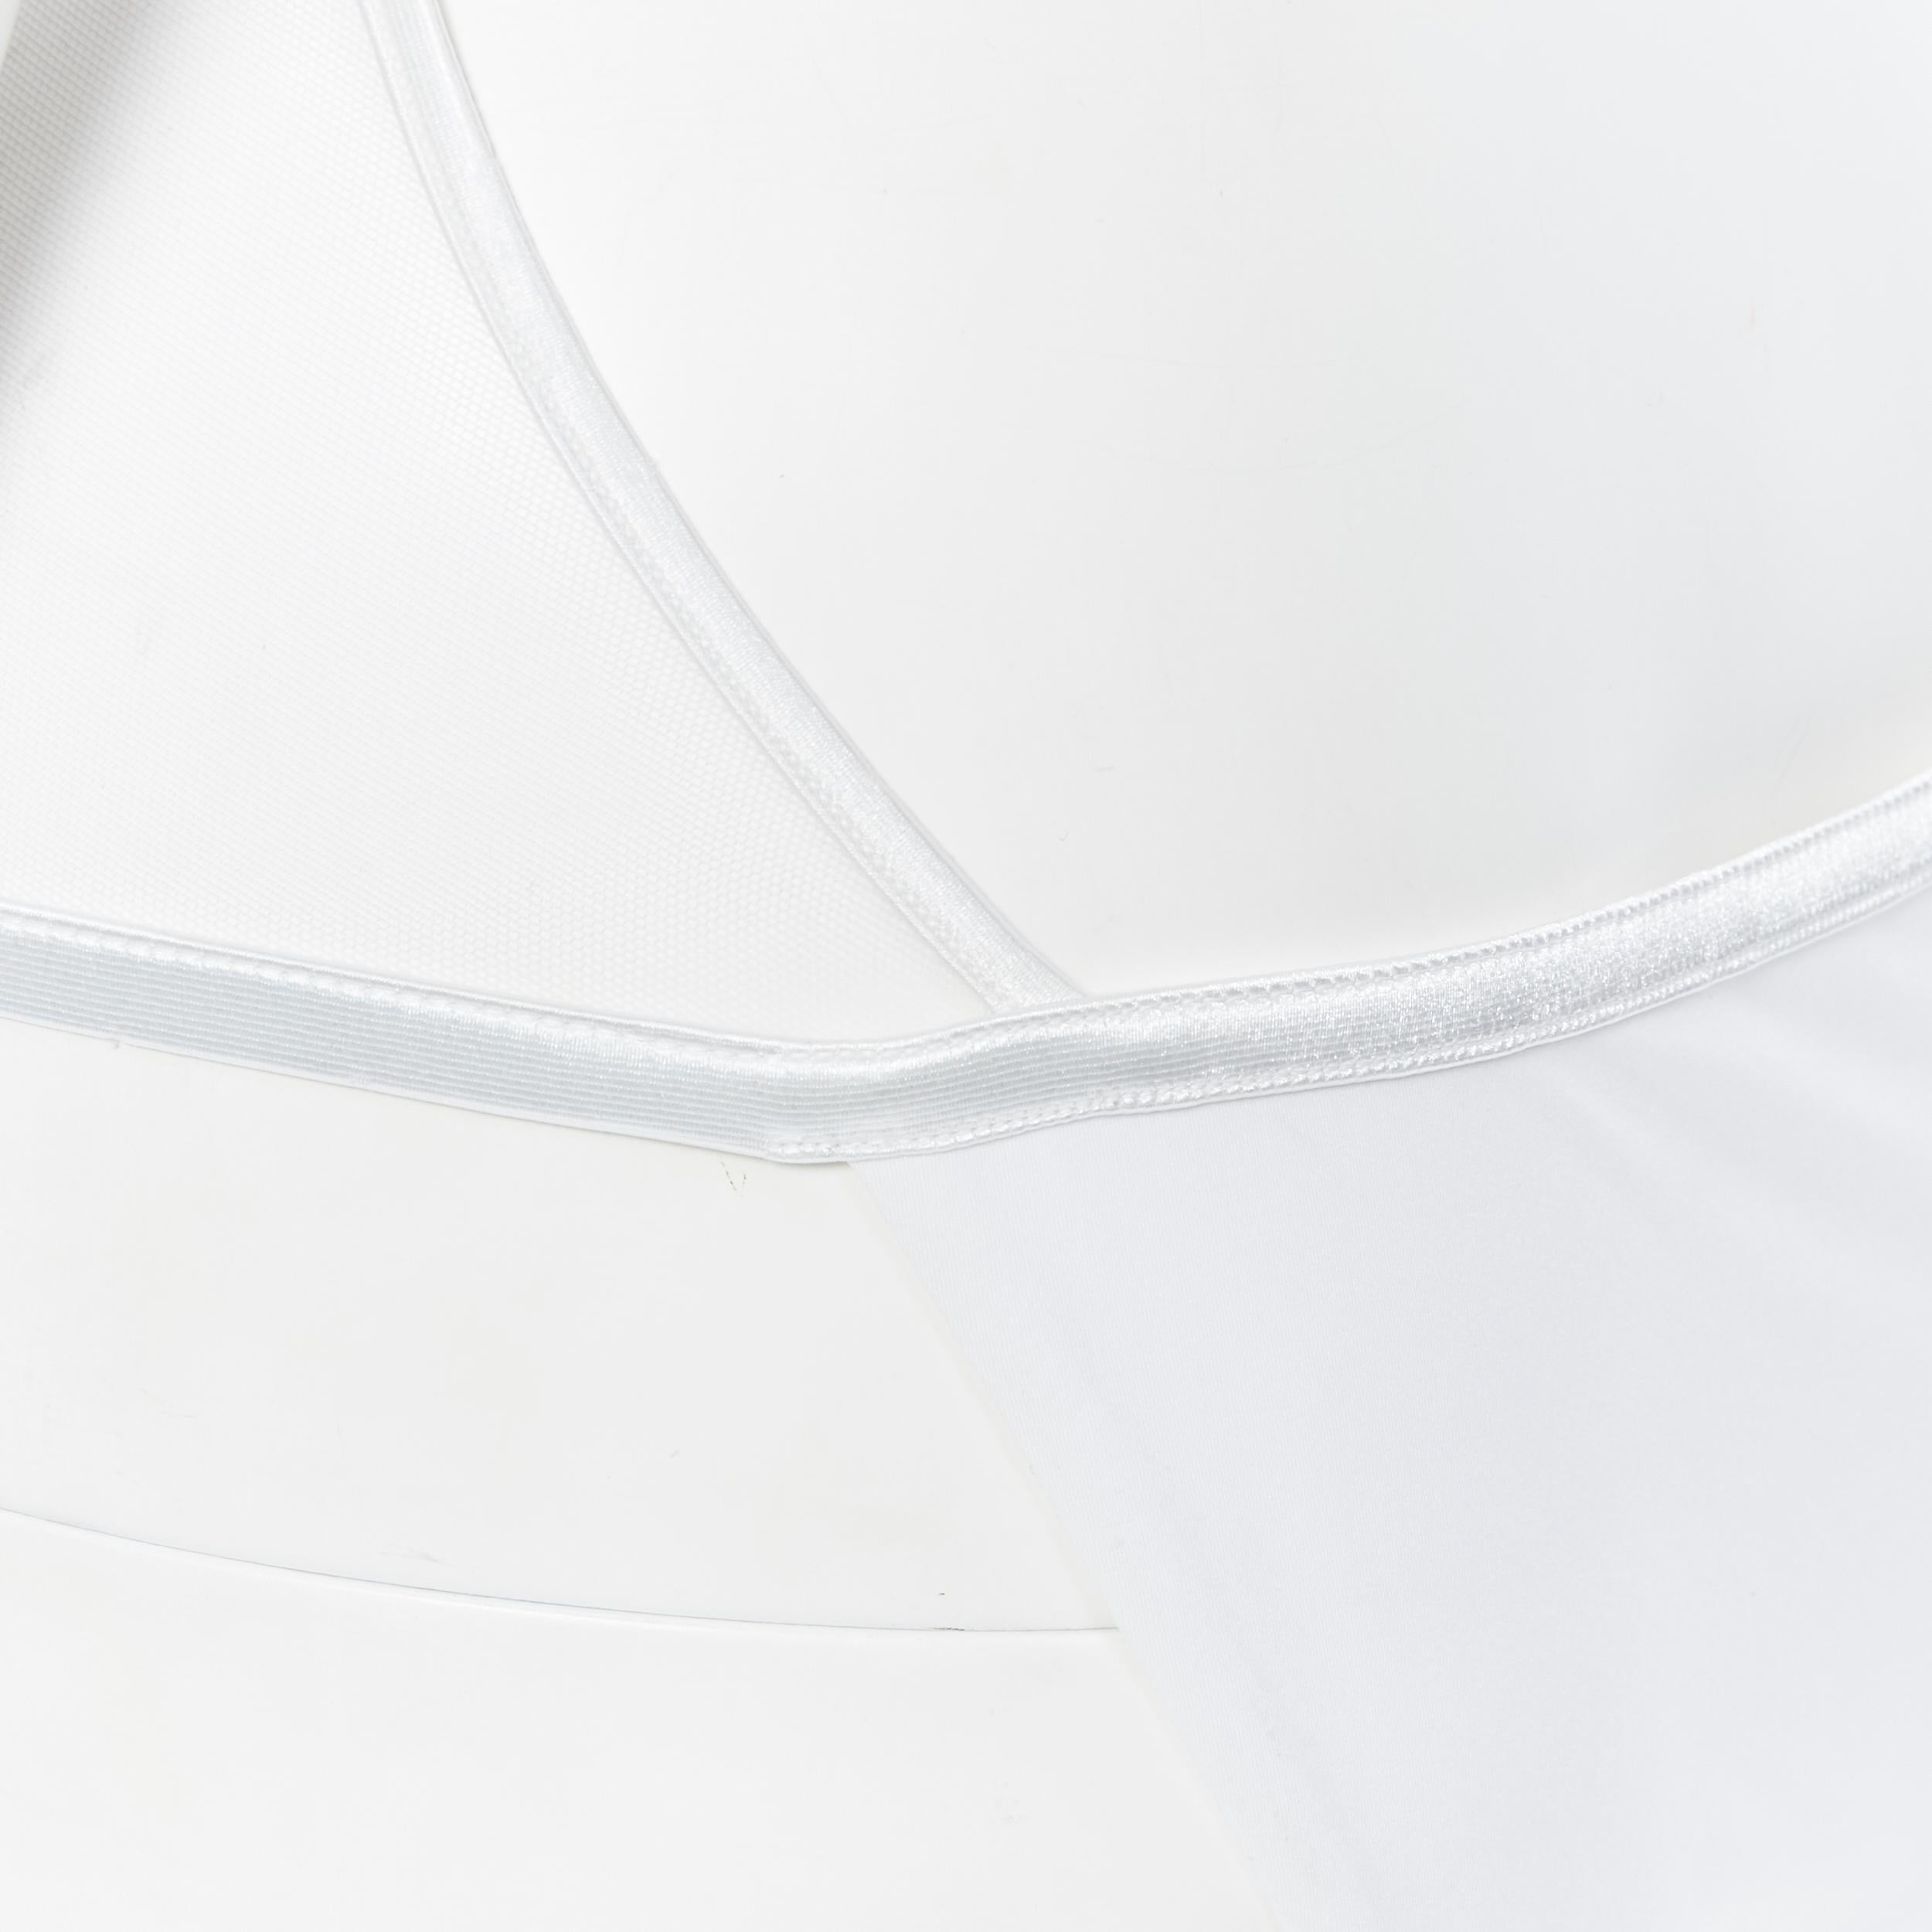 new LA PERLA Graphique Couture white boned sheer body monokini swimsuit IT44B M 1